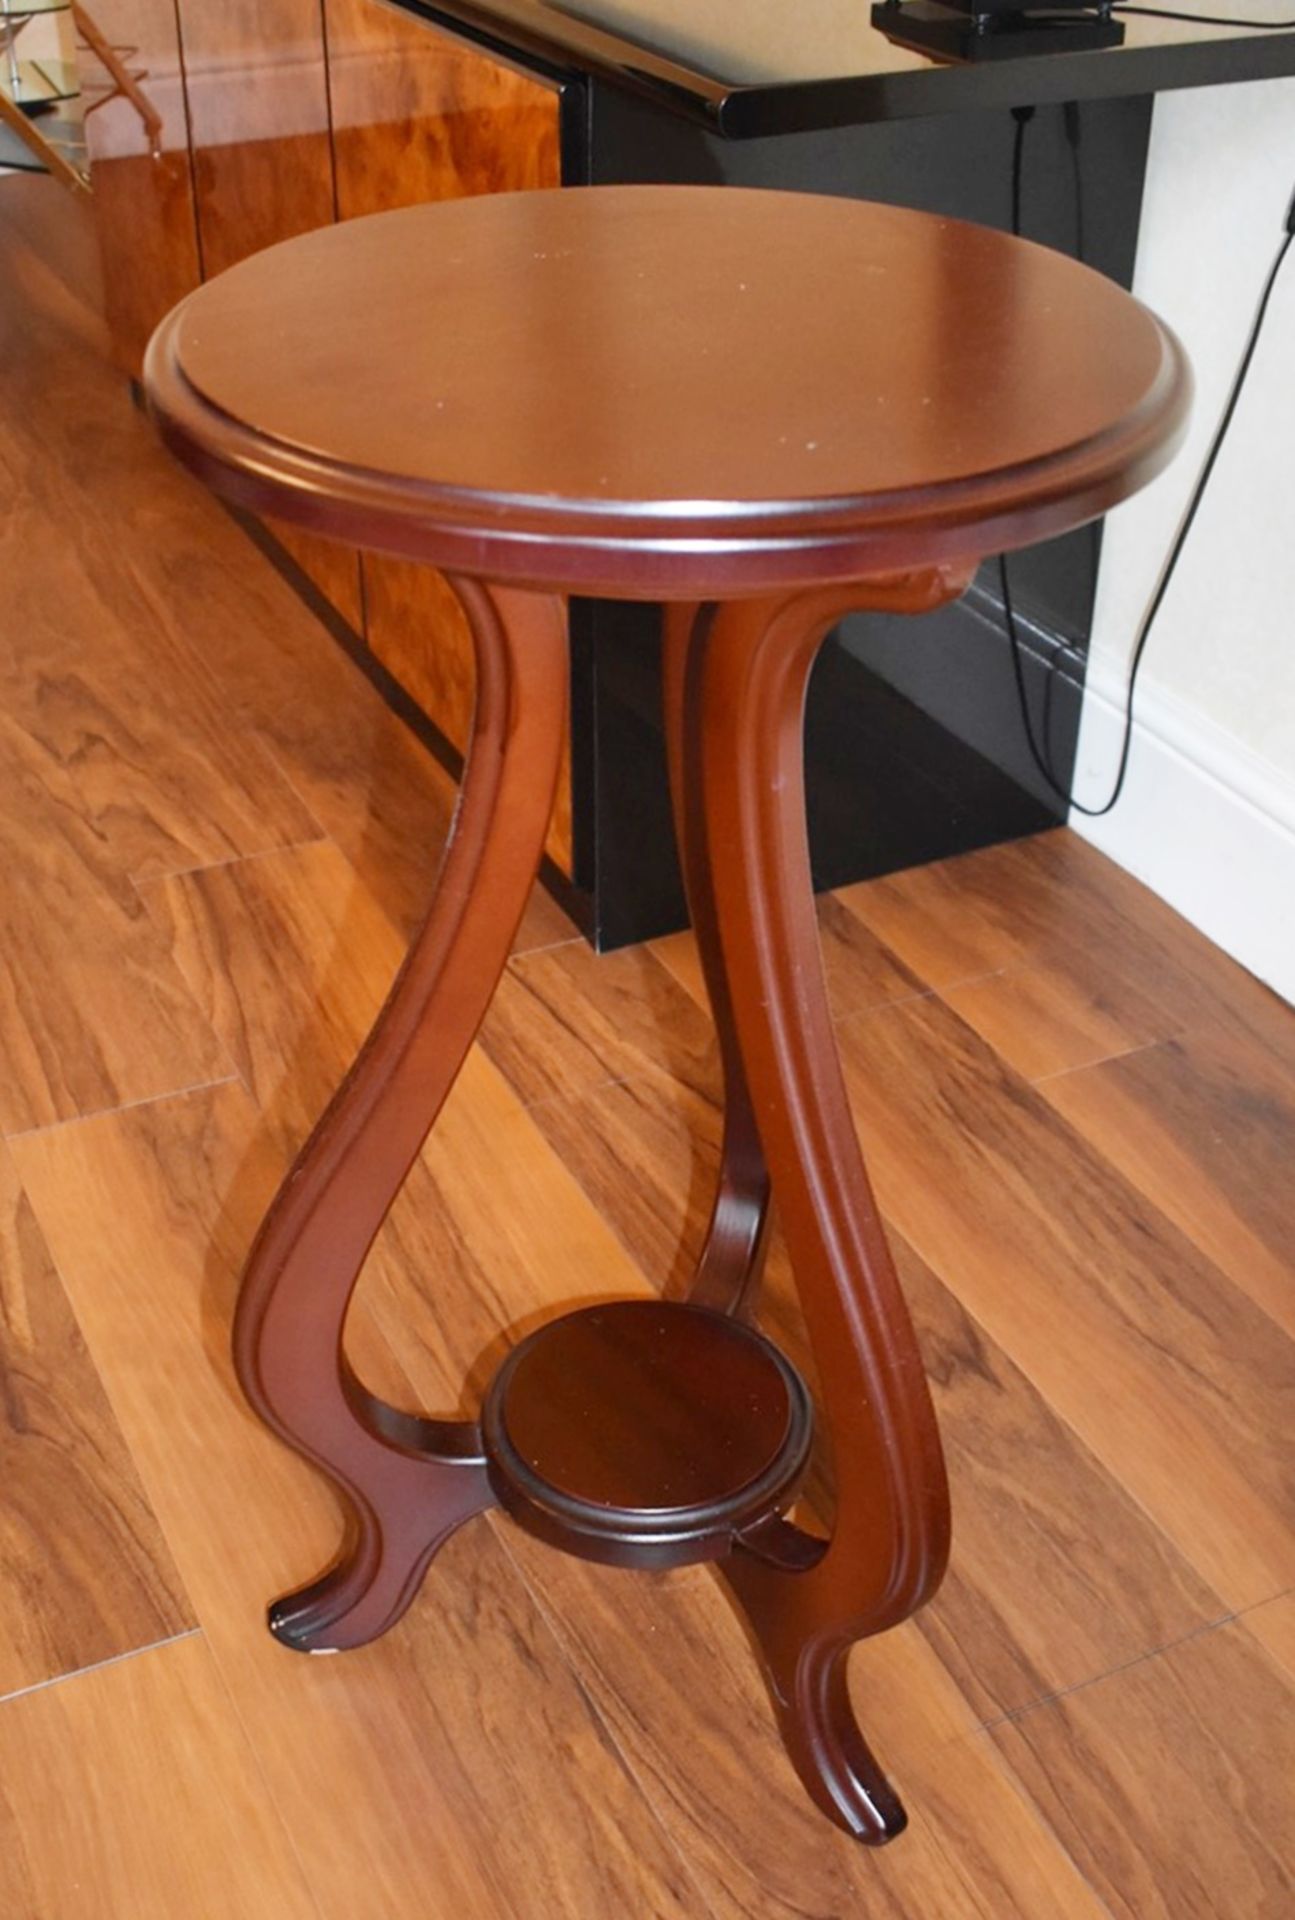 1 x Mahogany Lamp / Vase Table With Elegant Triple Leg Base and Undershelf - Dimensions H75 x W37